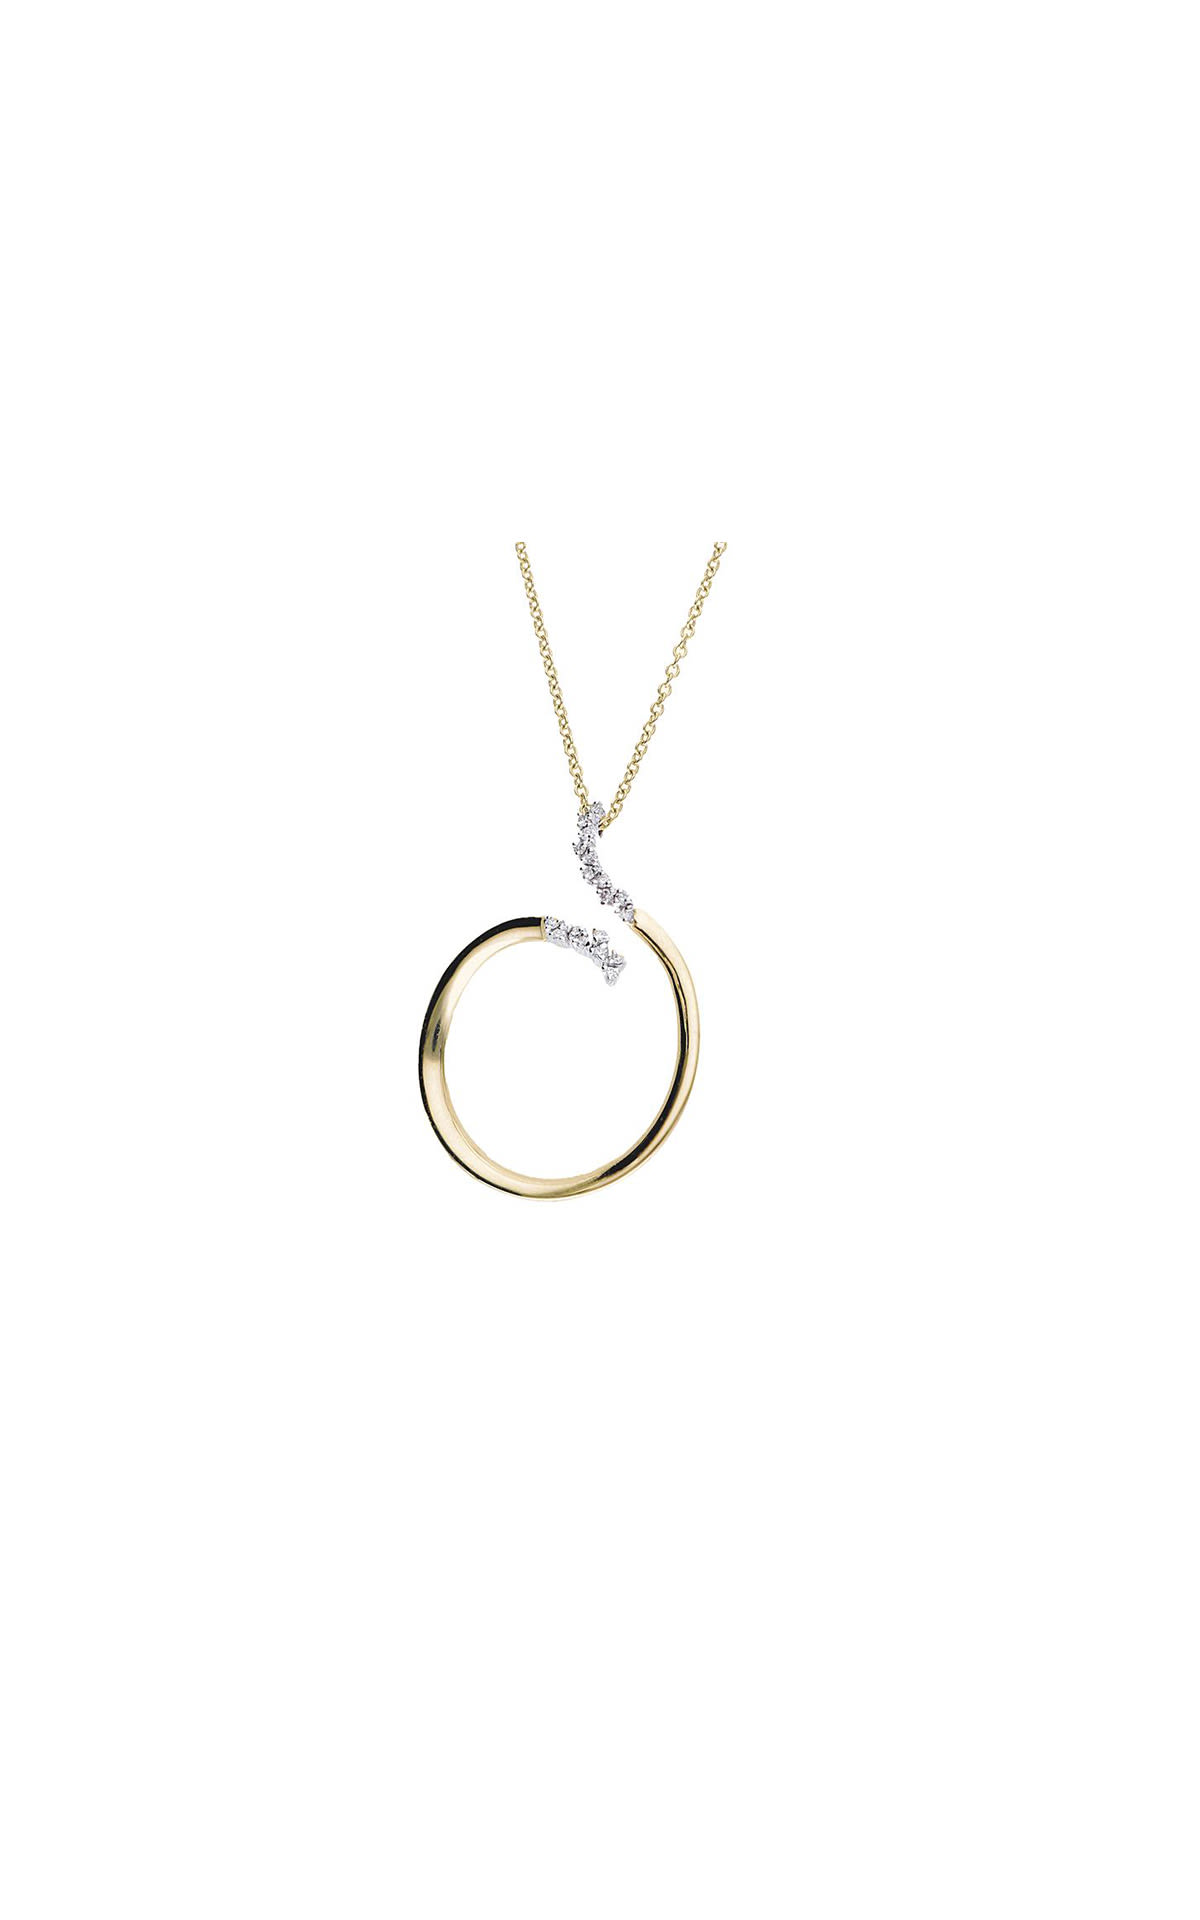 ALFIERI & ST. JOHN | Luxury Zone Yellow gold pendant with 0.13 CT diamonds and white gold chain